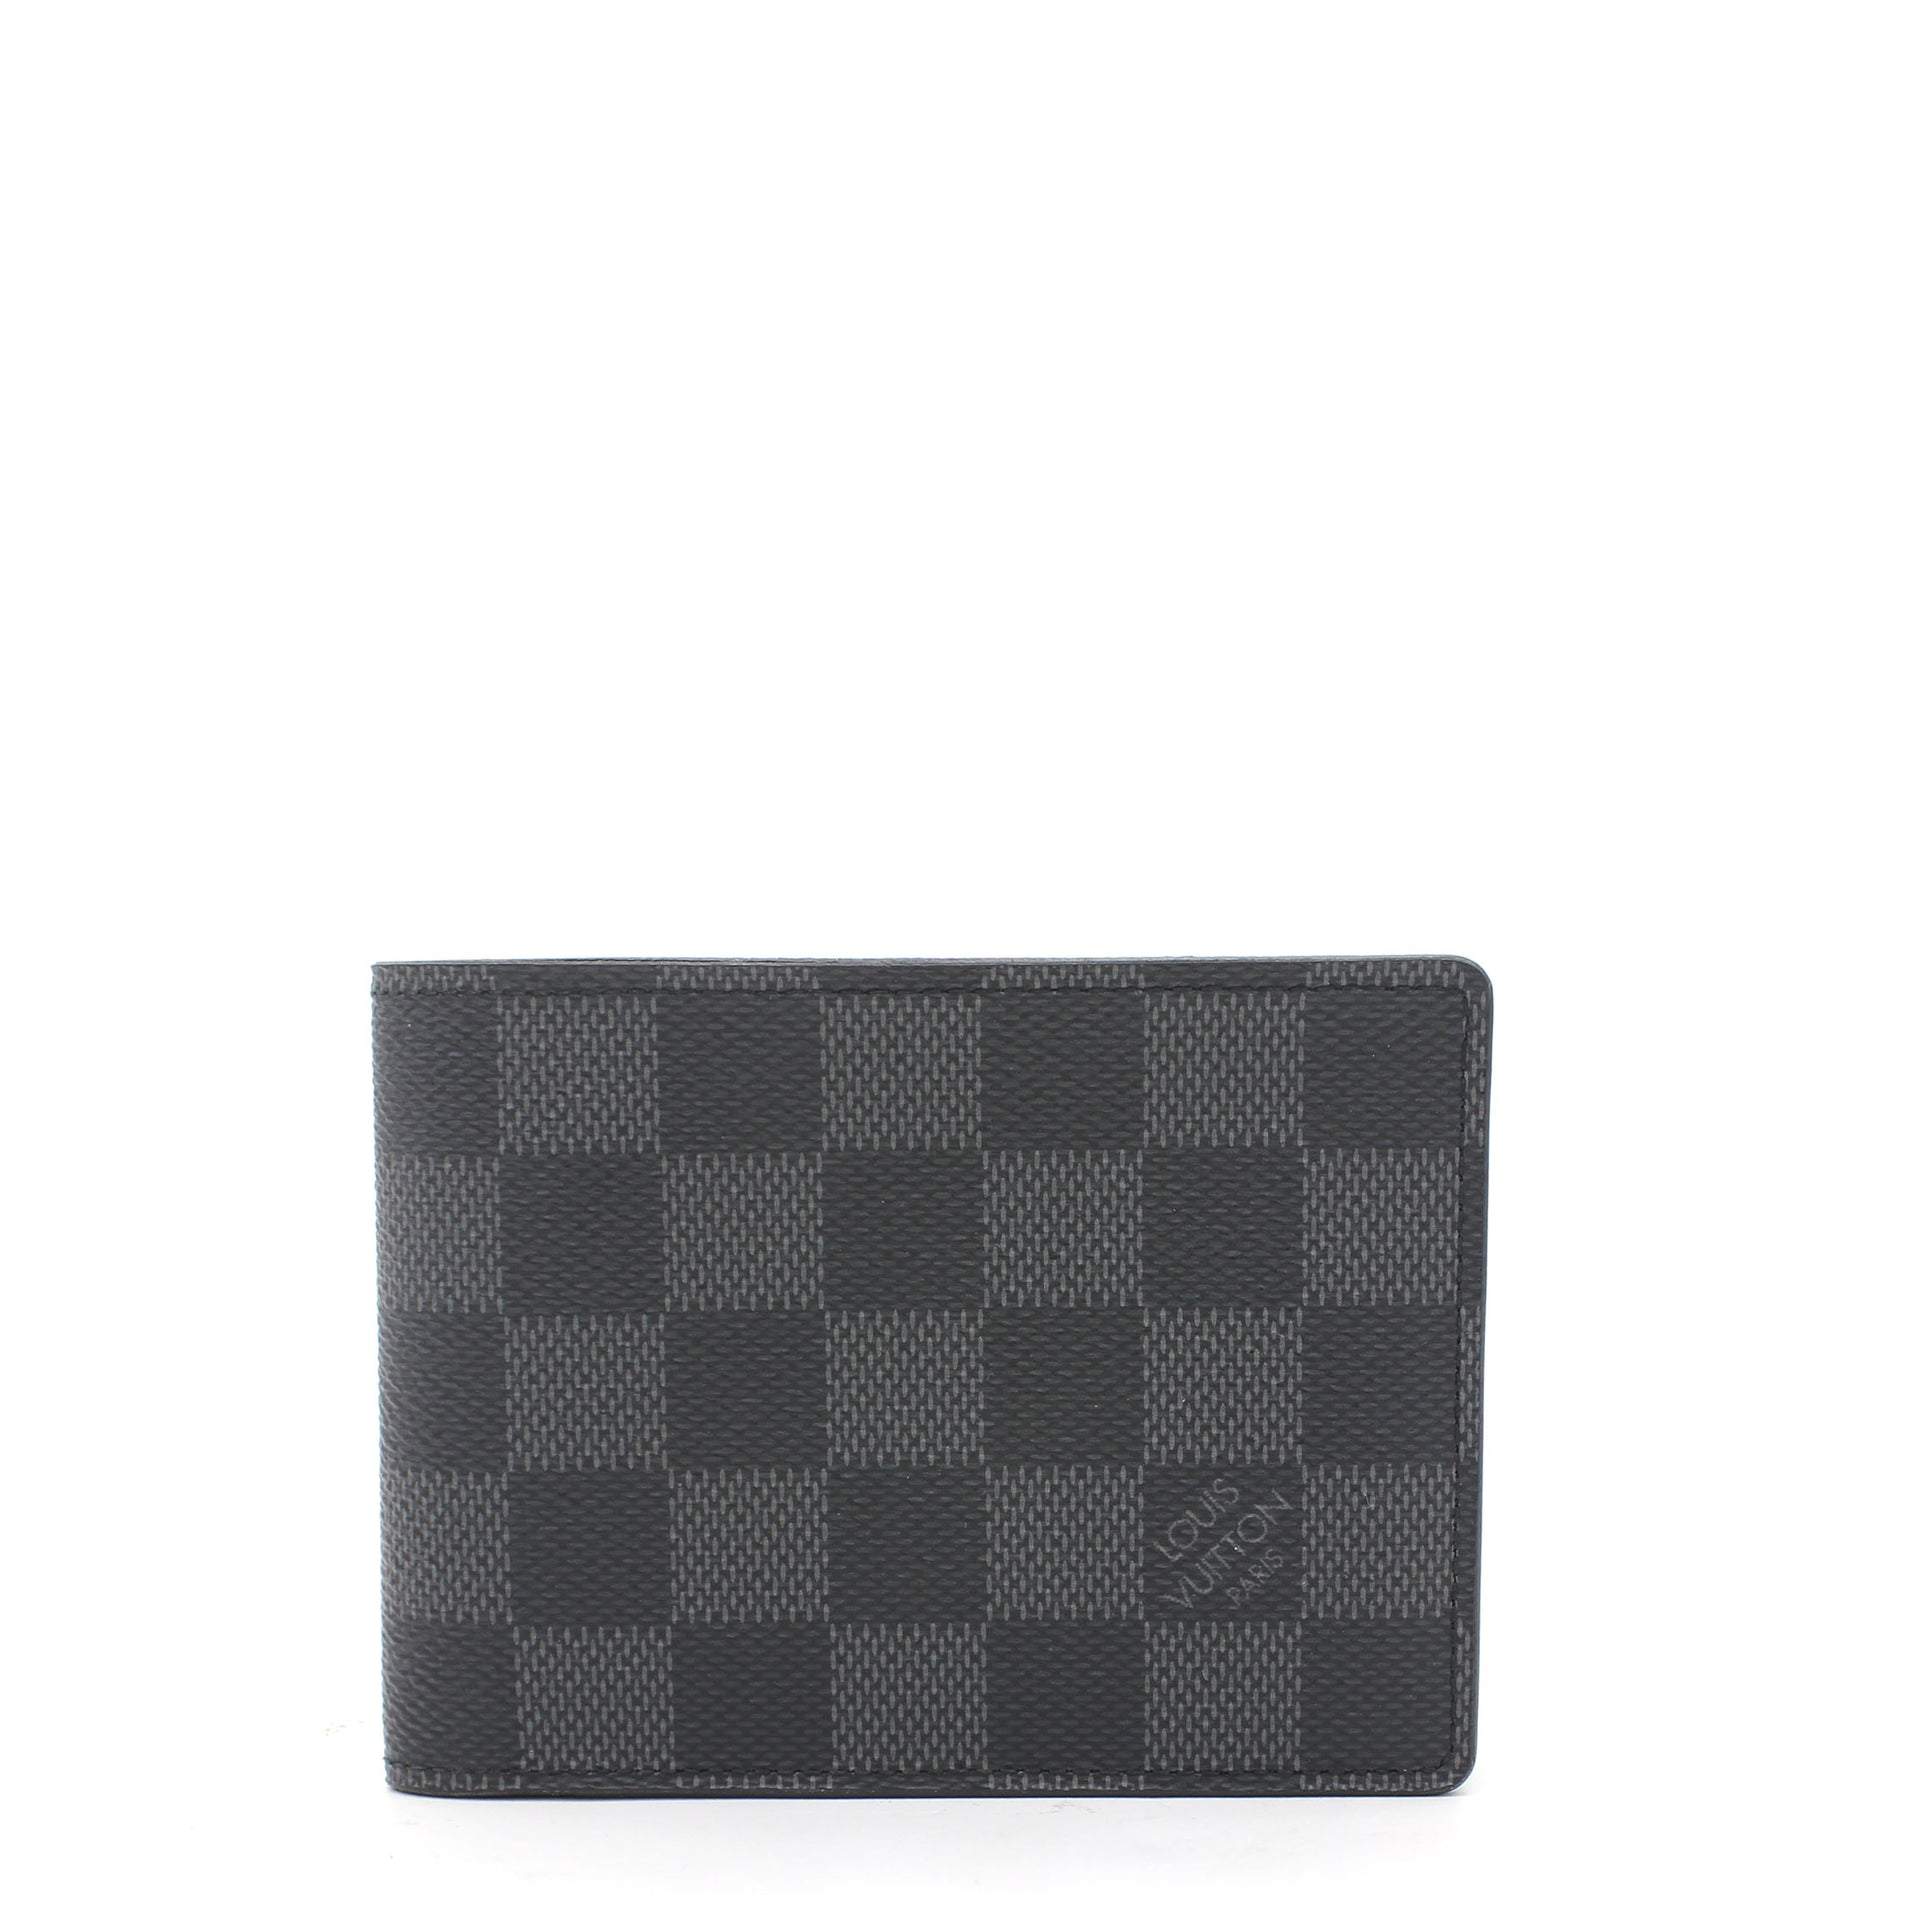 Louis Vuitton Multiple Wallet Damier Graphite Black/Grey in Canvas